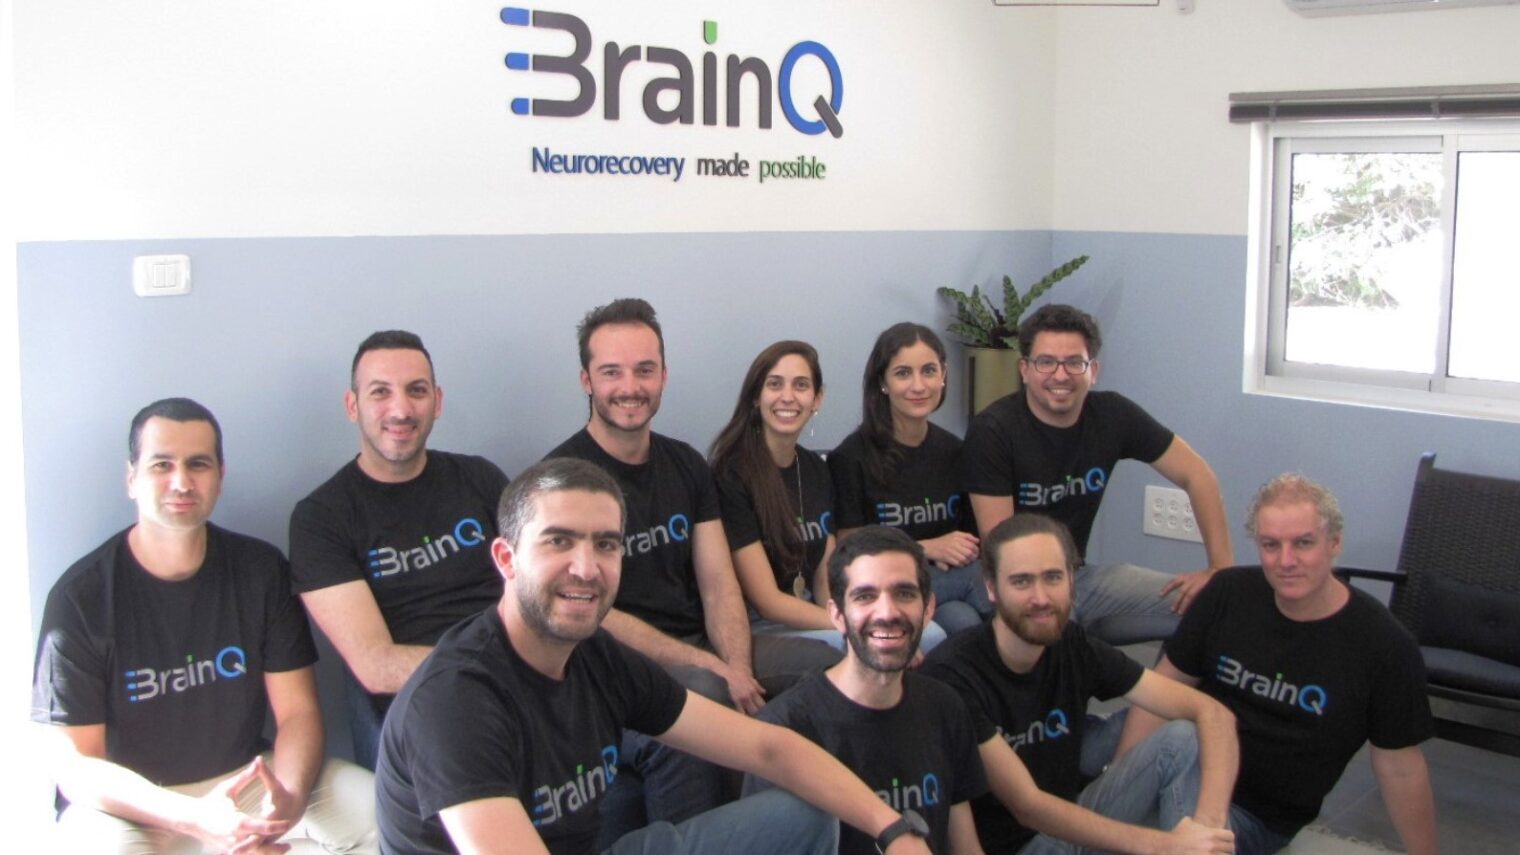 The BrainQ team in Jerusalem. Photo: courtesy